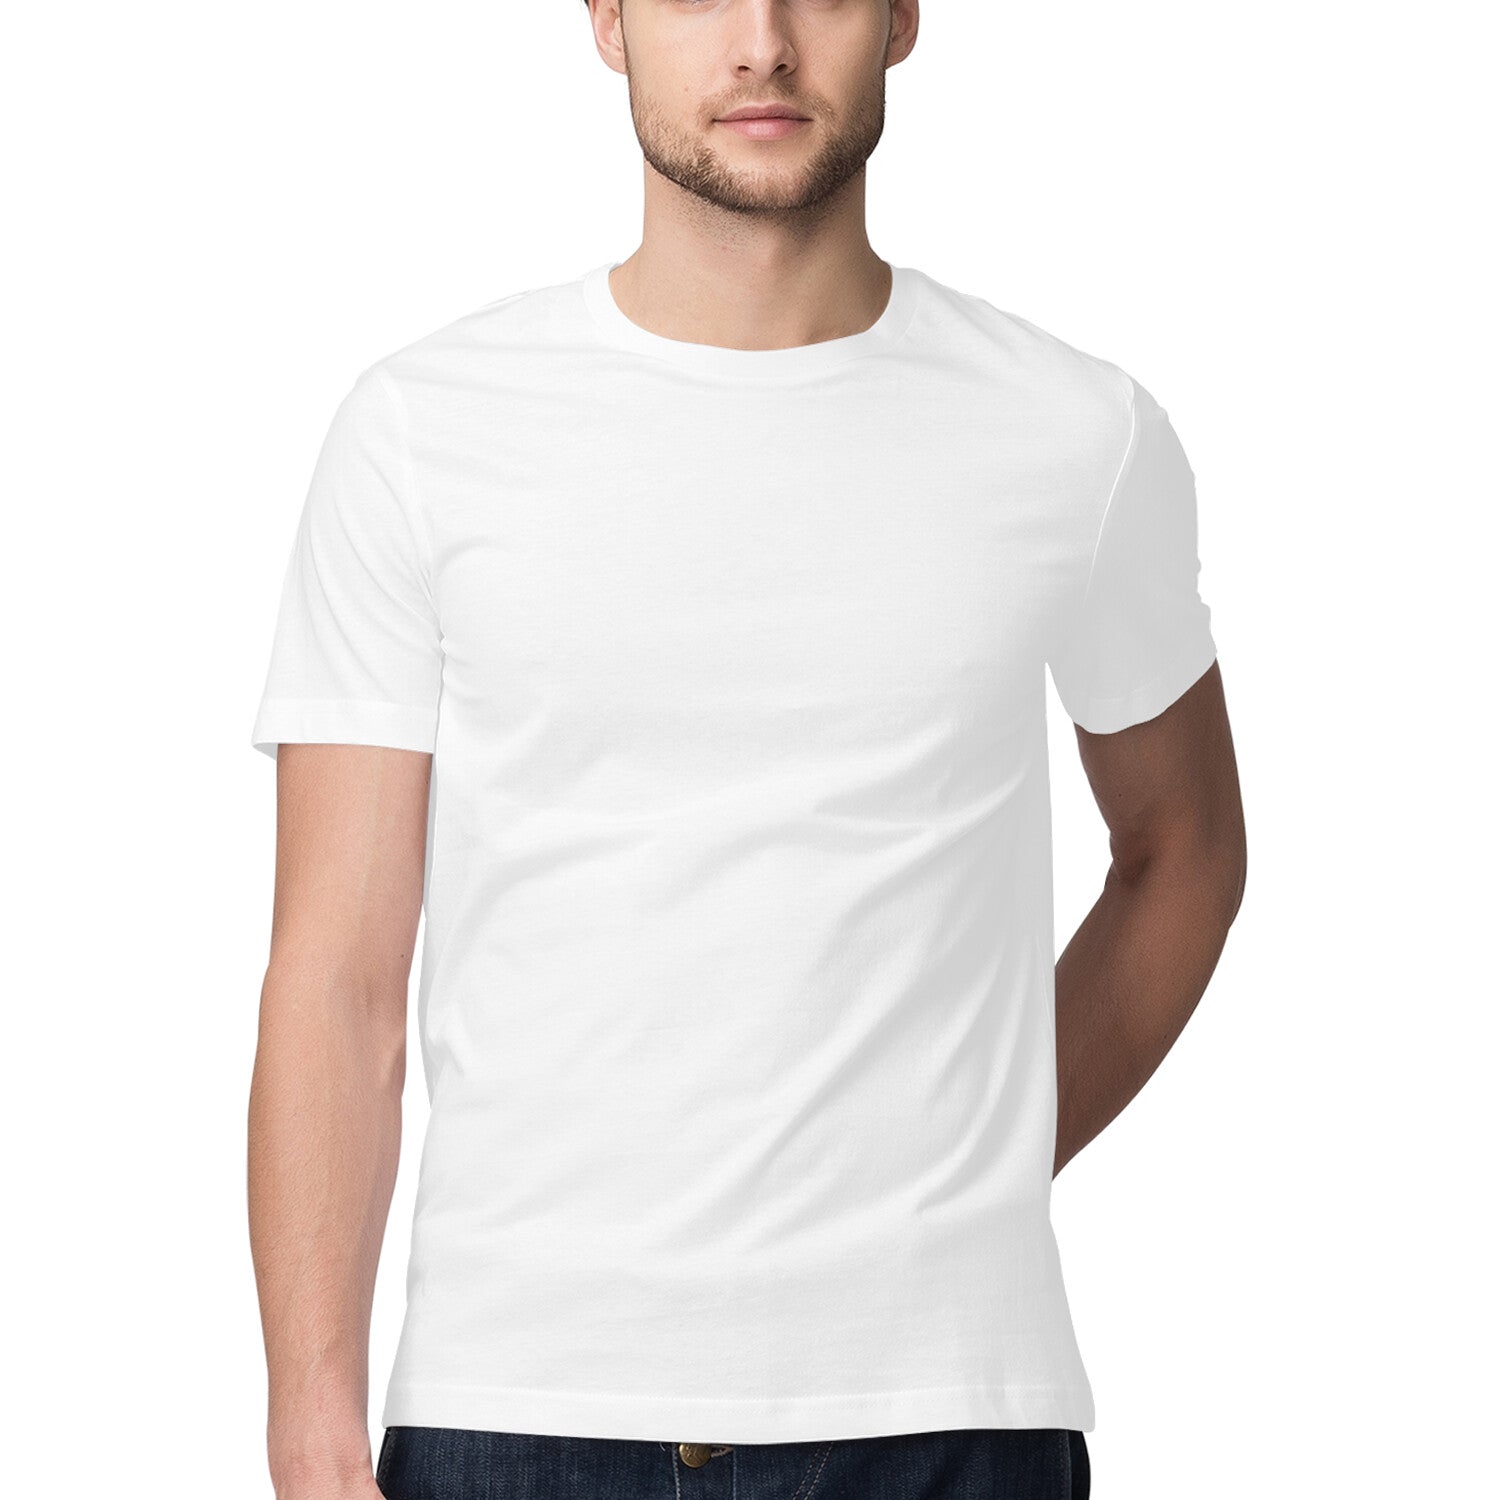 TNH - Men's Round Neck Plain T-Shirt